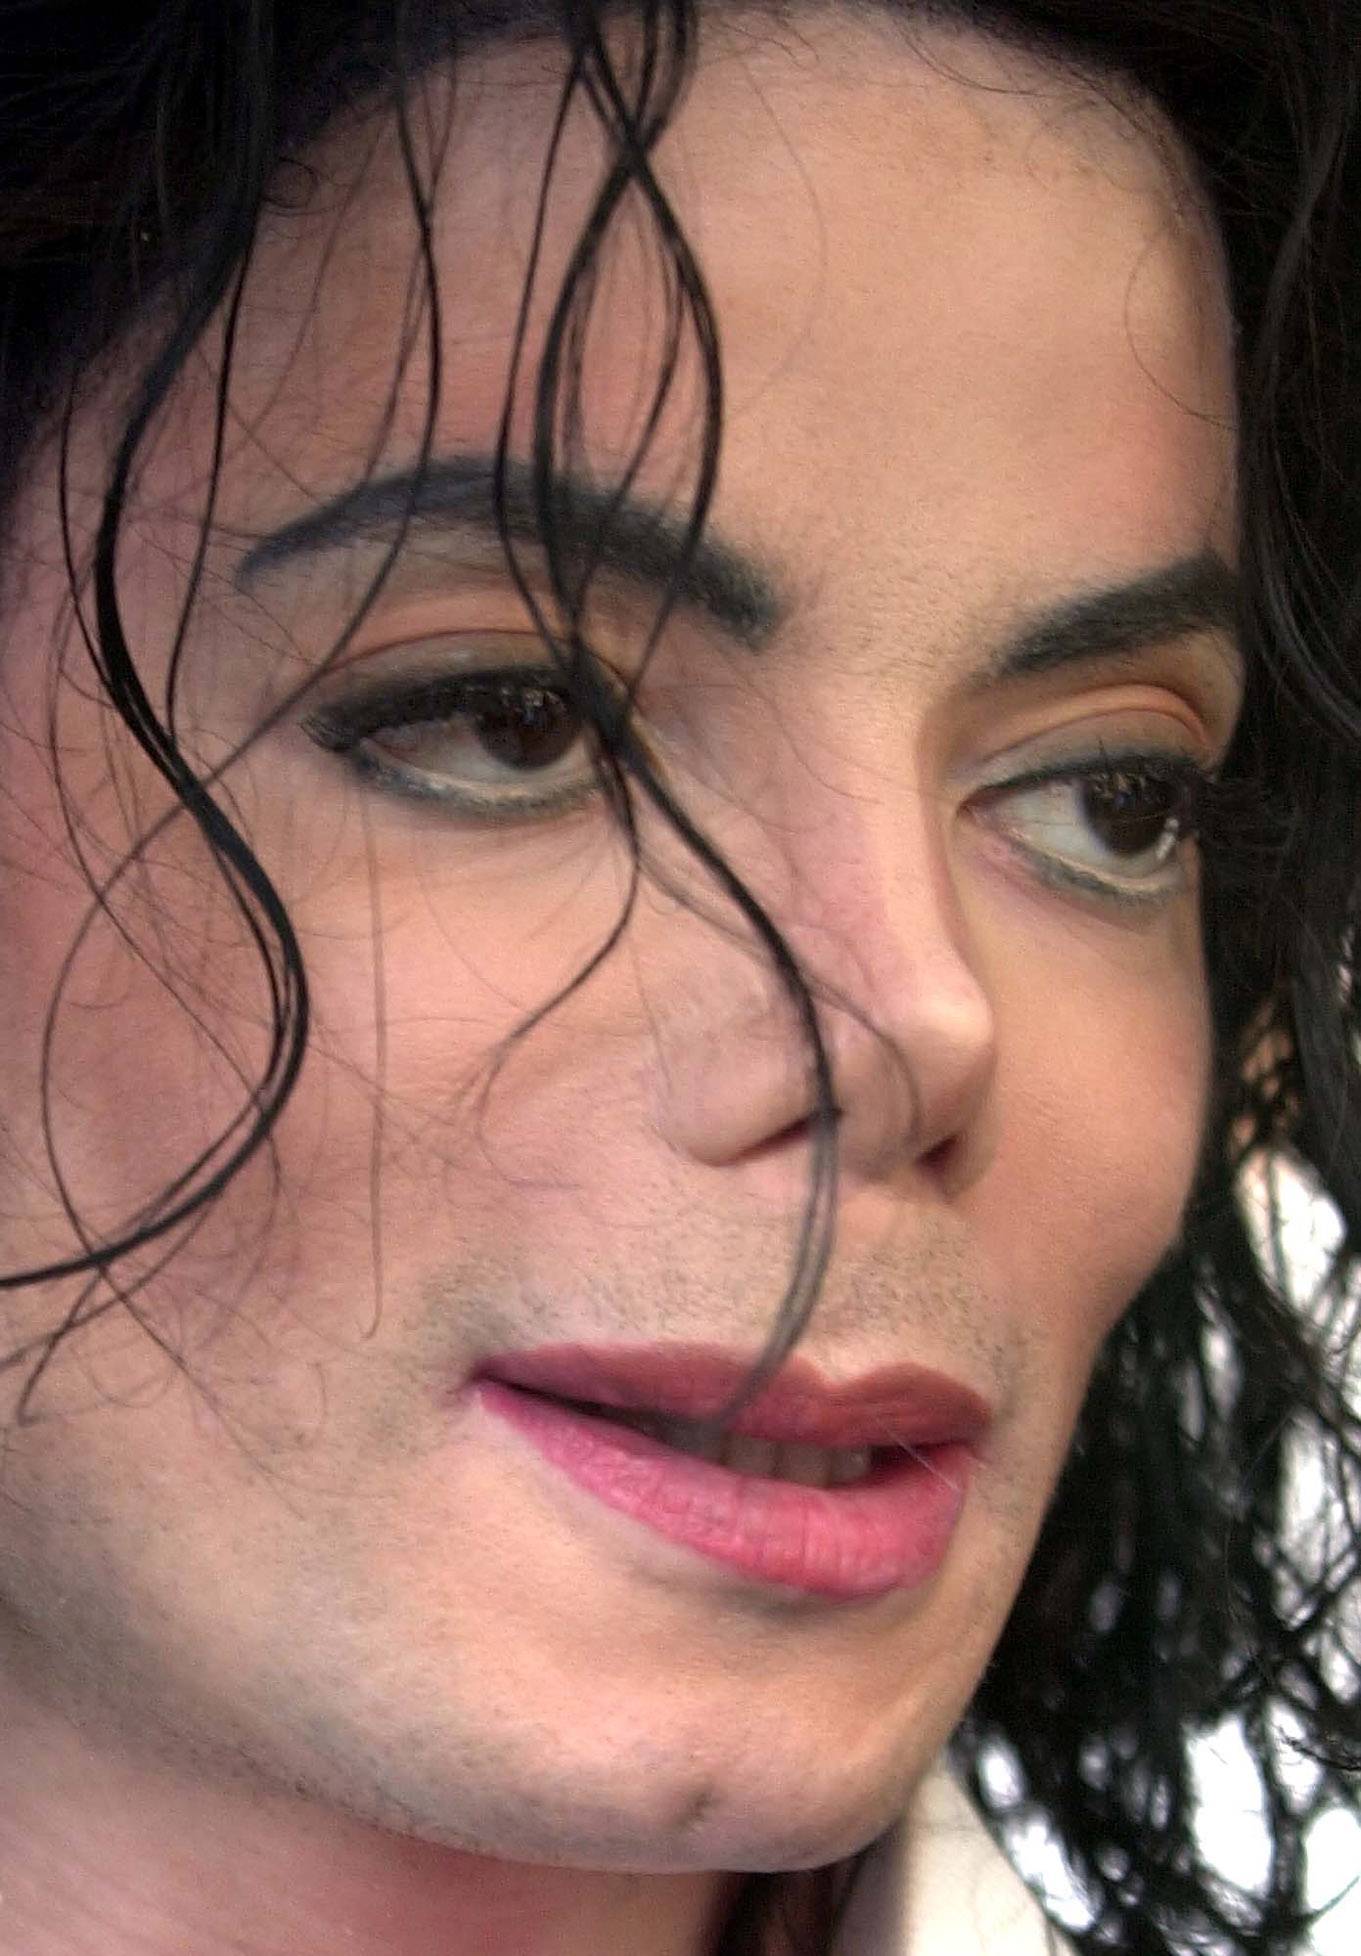 US singer Michael Jackson